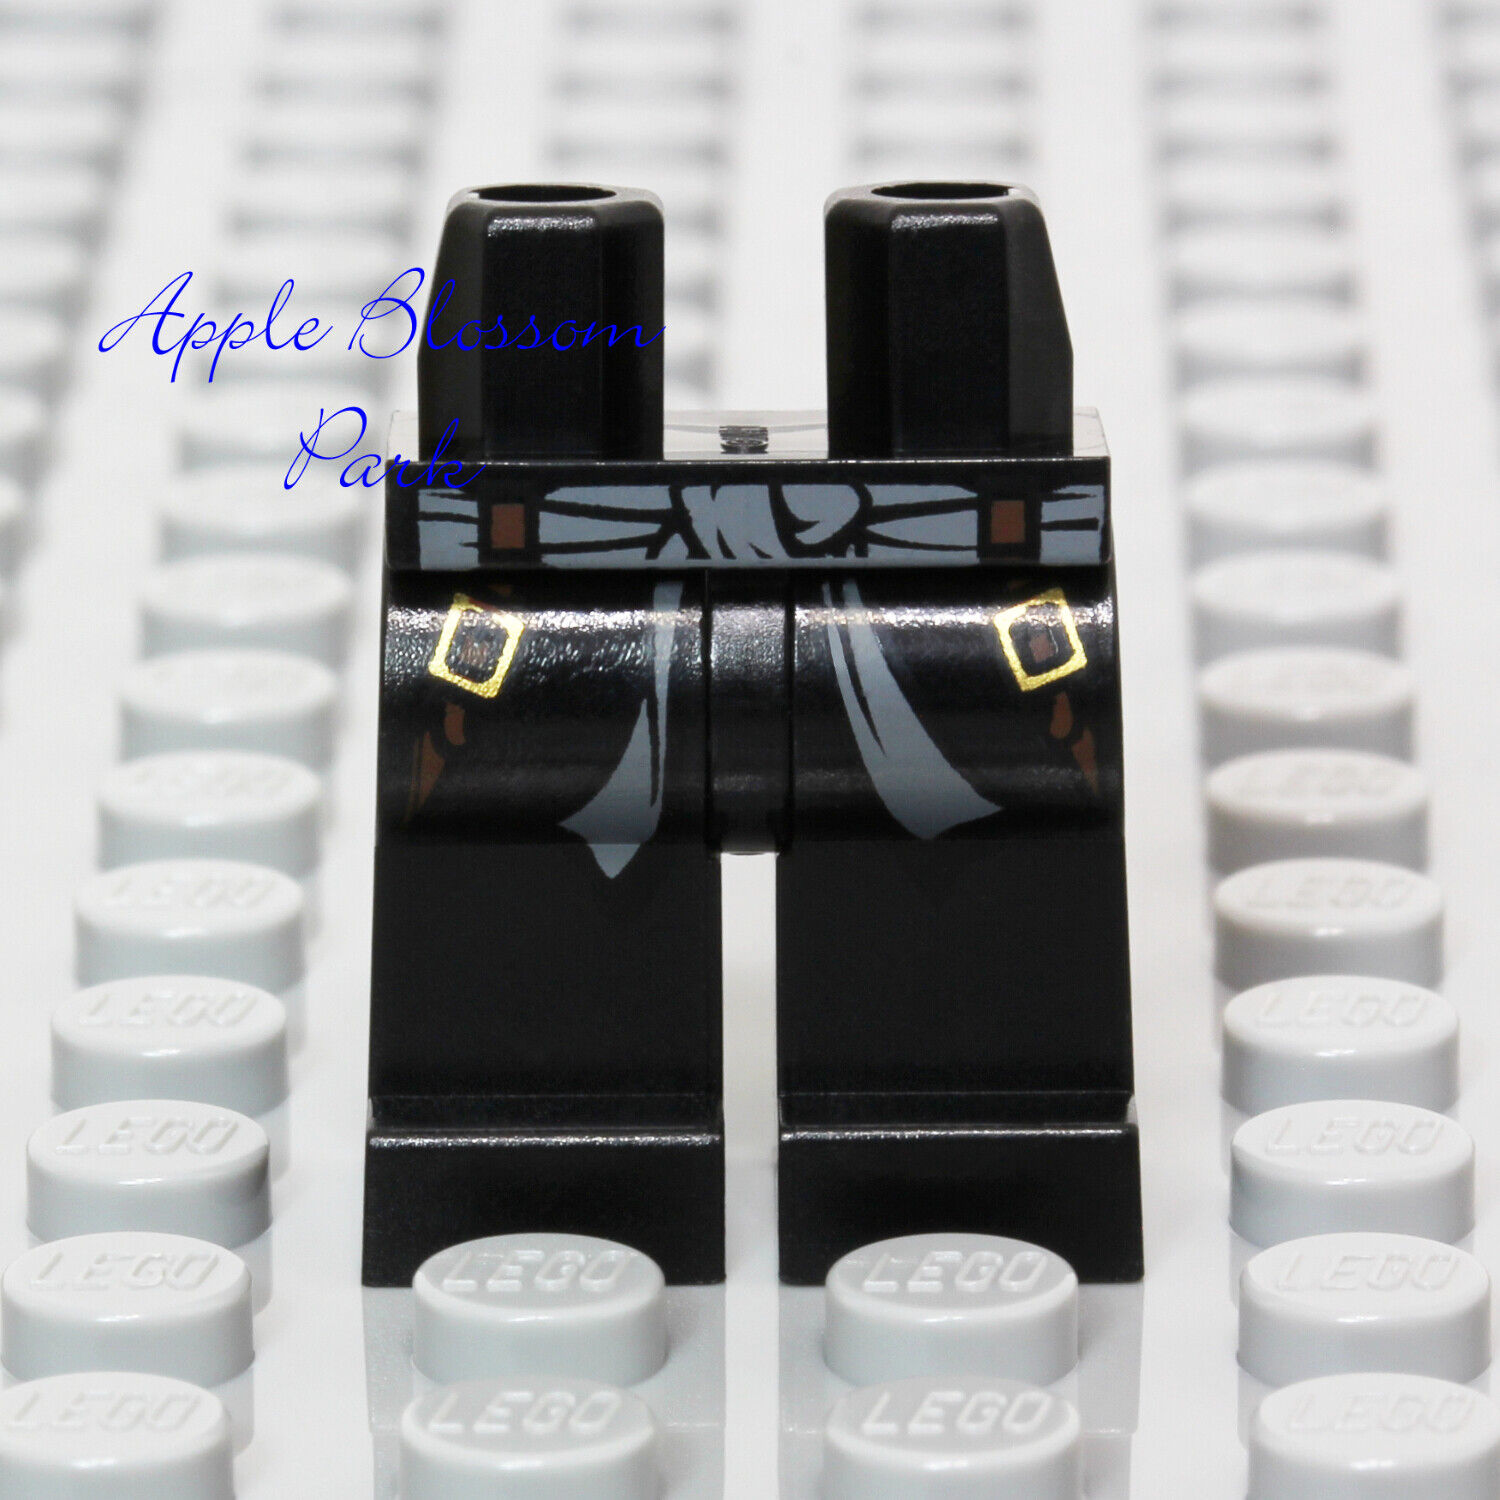 NEW Lego Ninjago BLACK VEST MINIFIG TORSO & LEGS - Ninja Cole ZX 9449 9447  9444